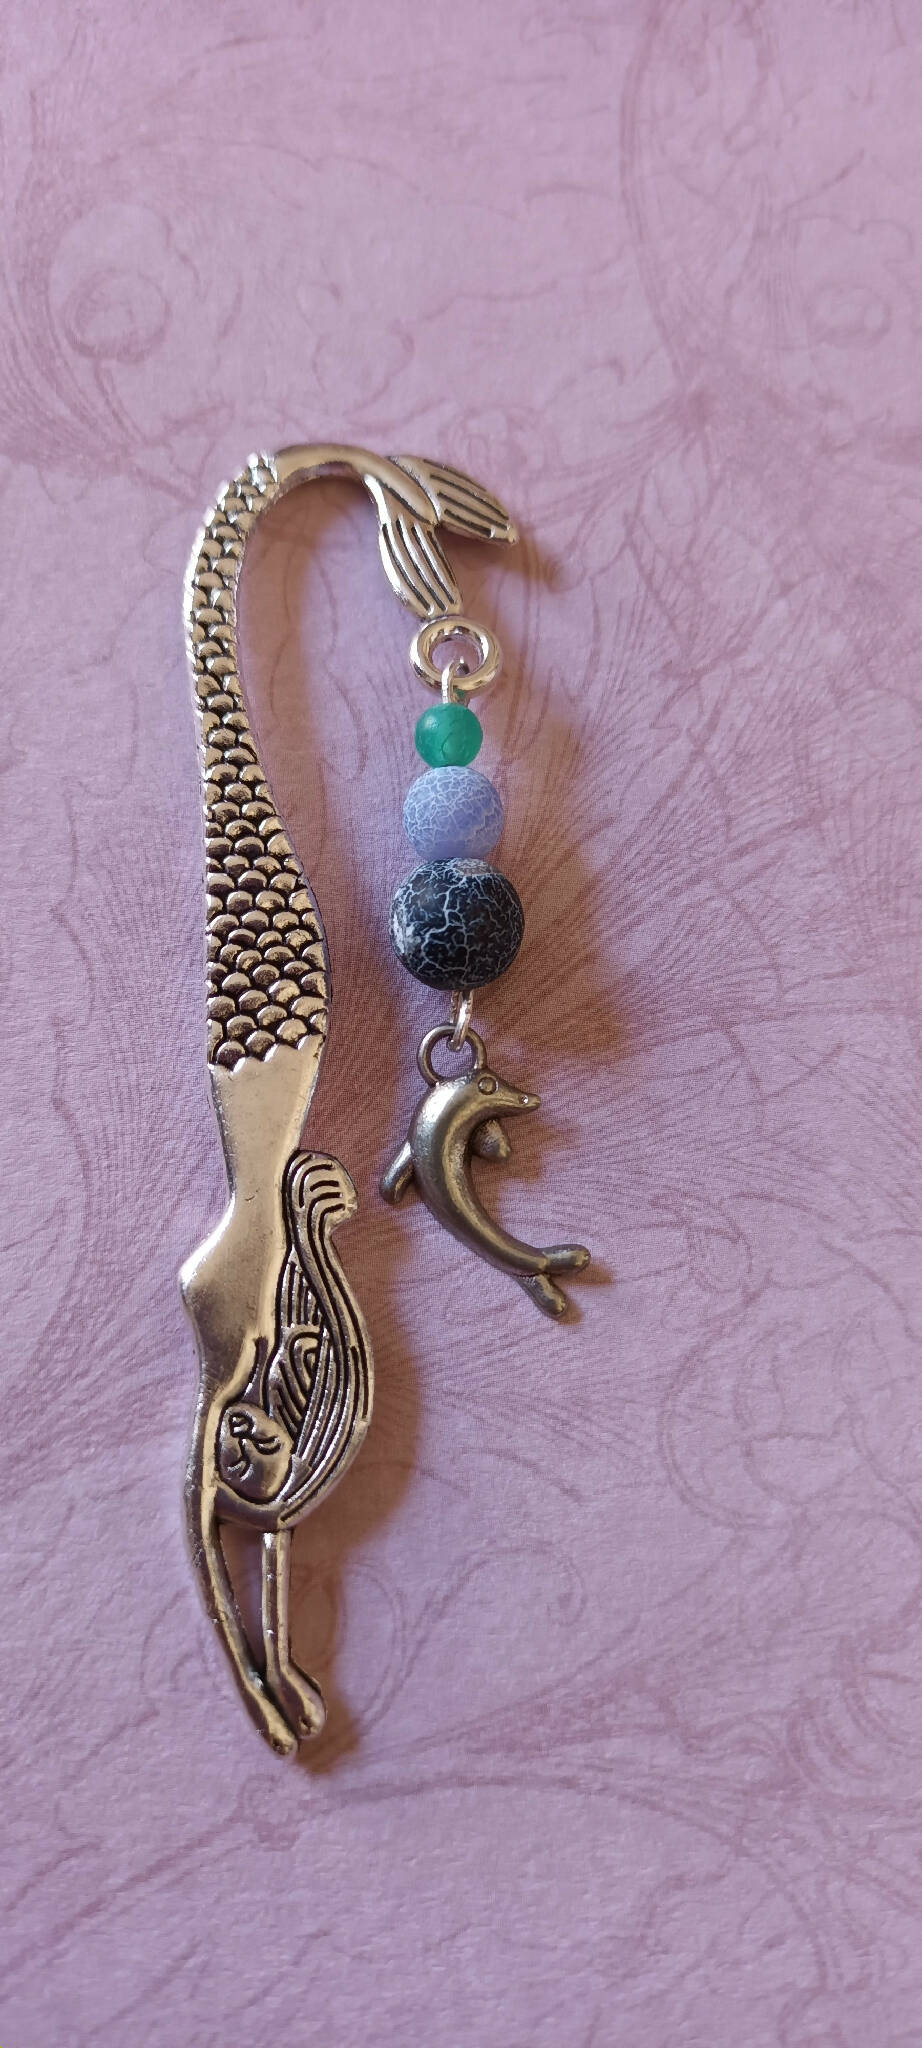 Blue mermaid bookmark